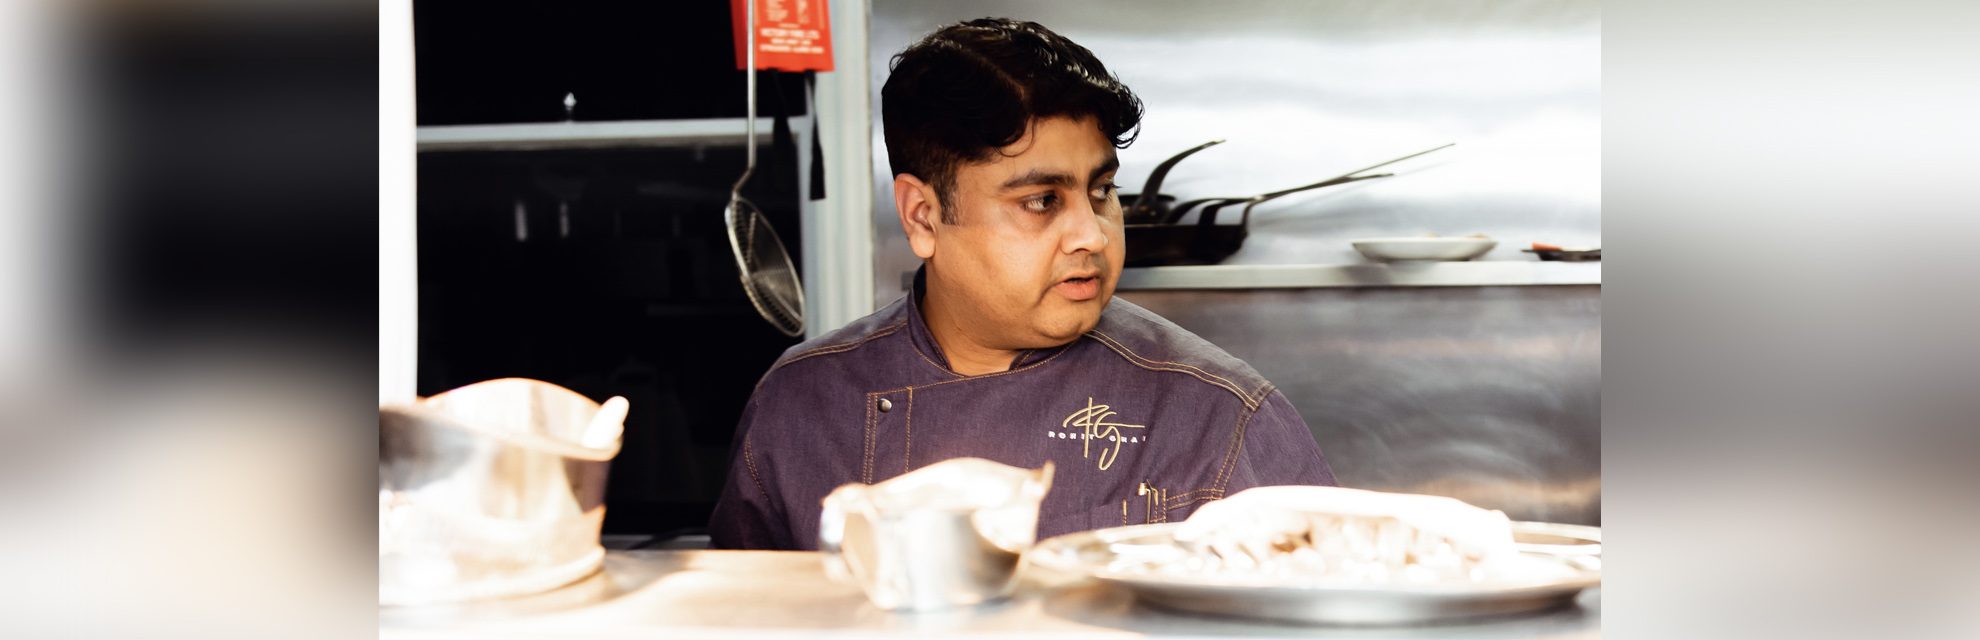 Cozinheiro | Rohit Ghai | índio global